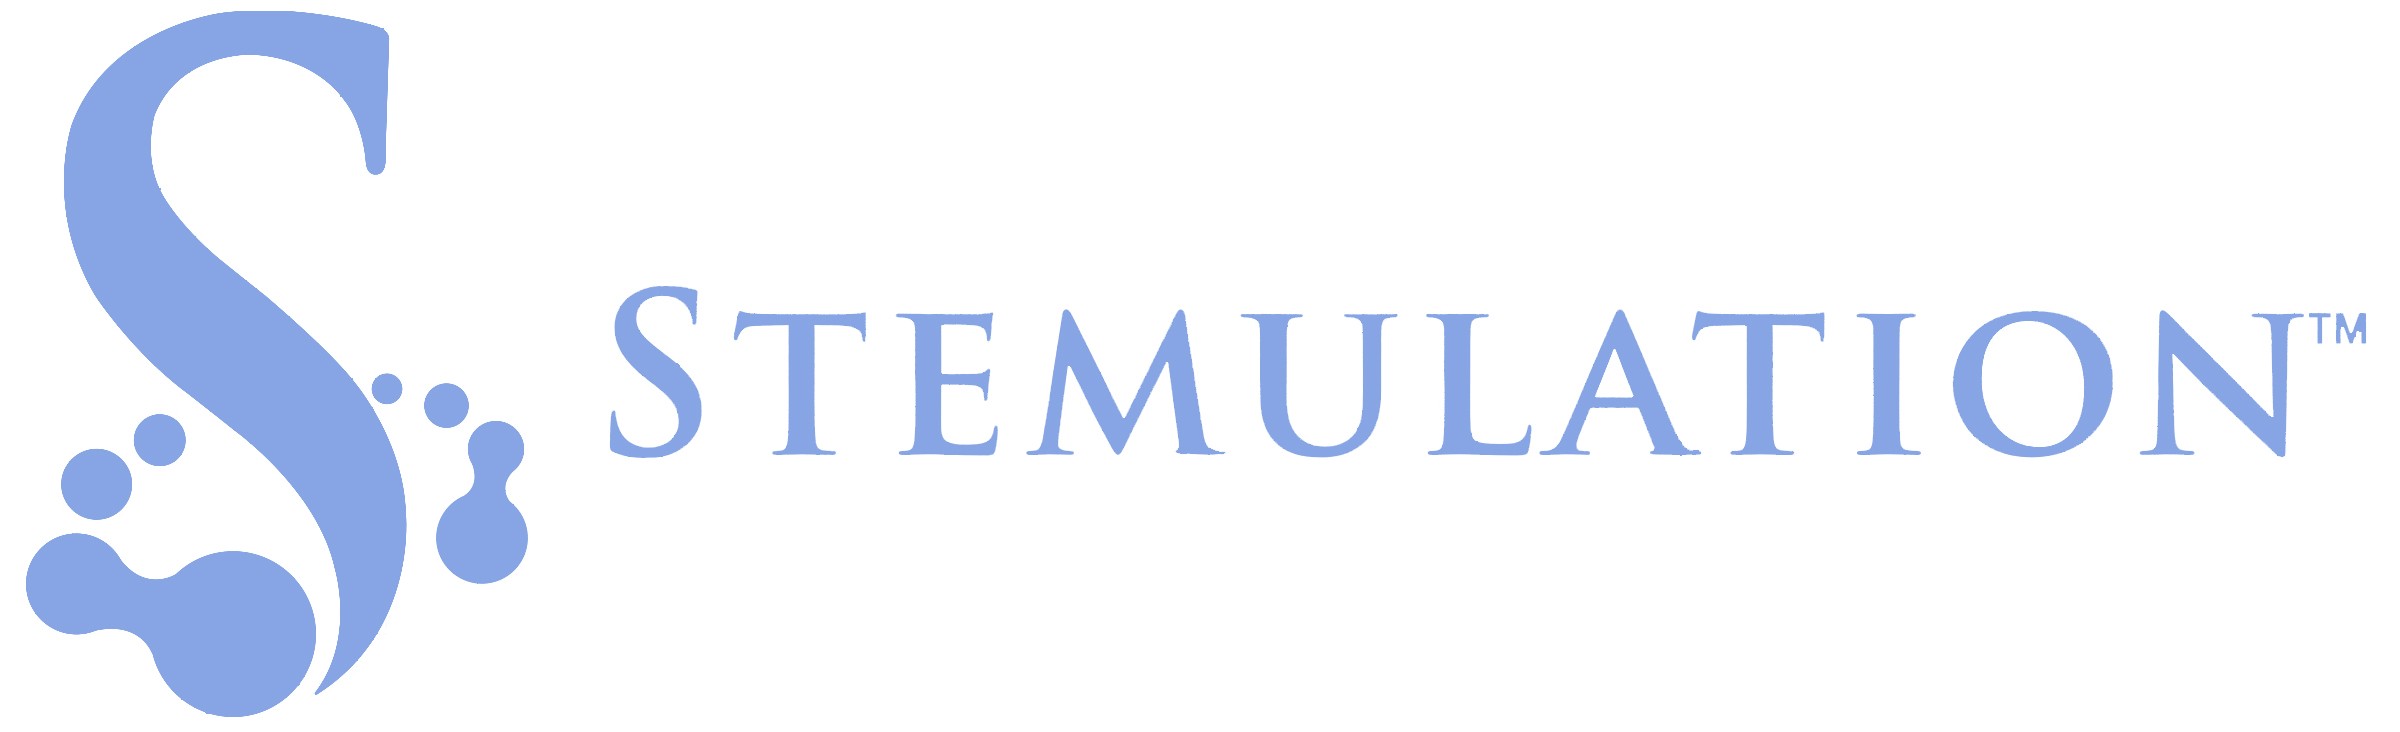 Stemulation logo